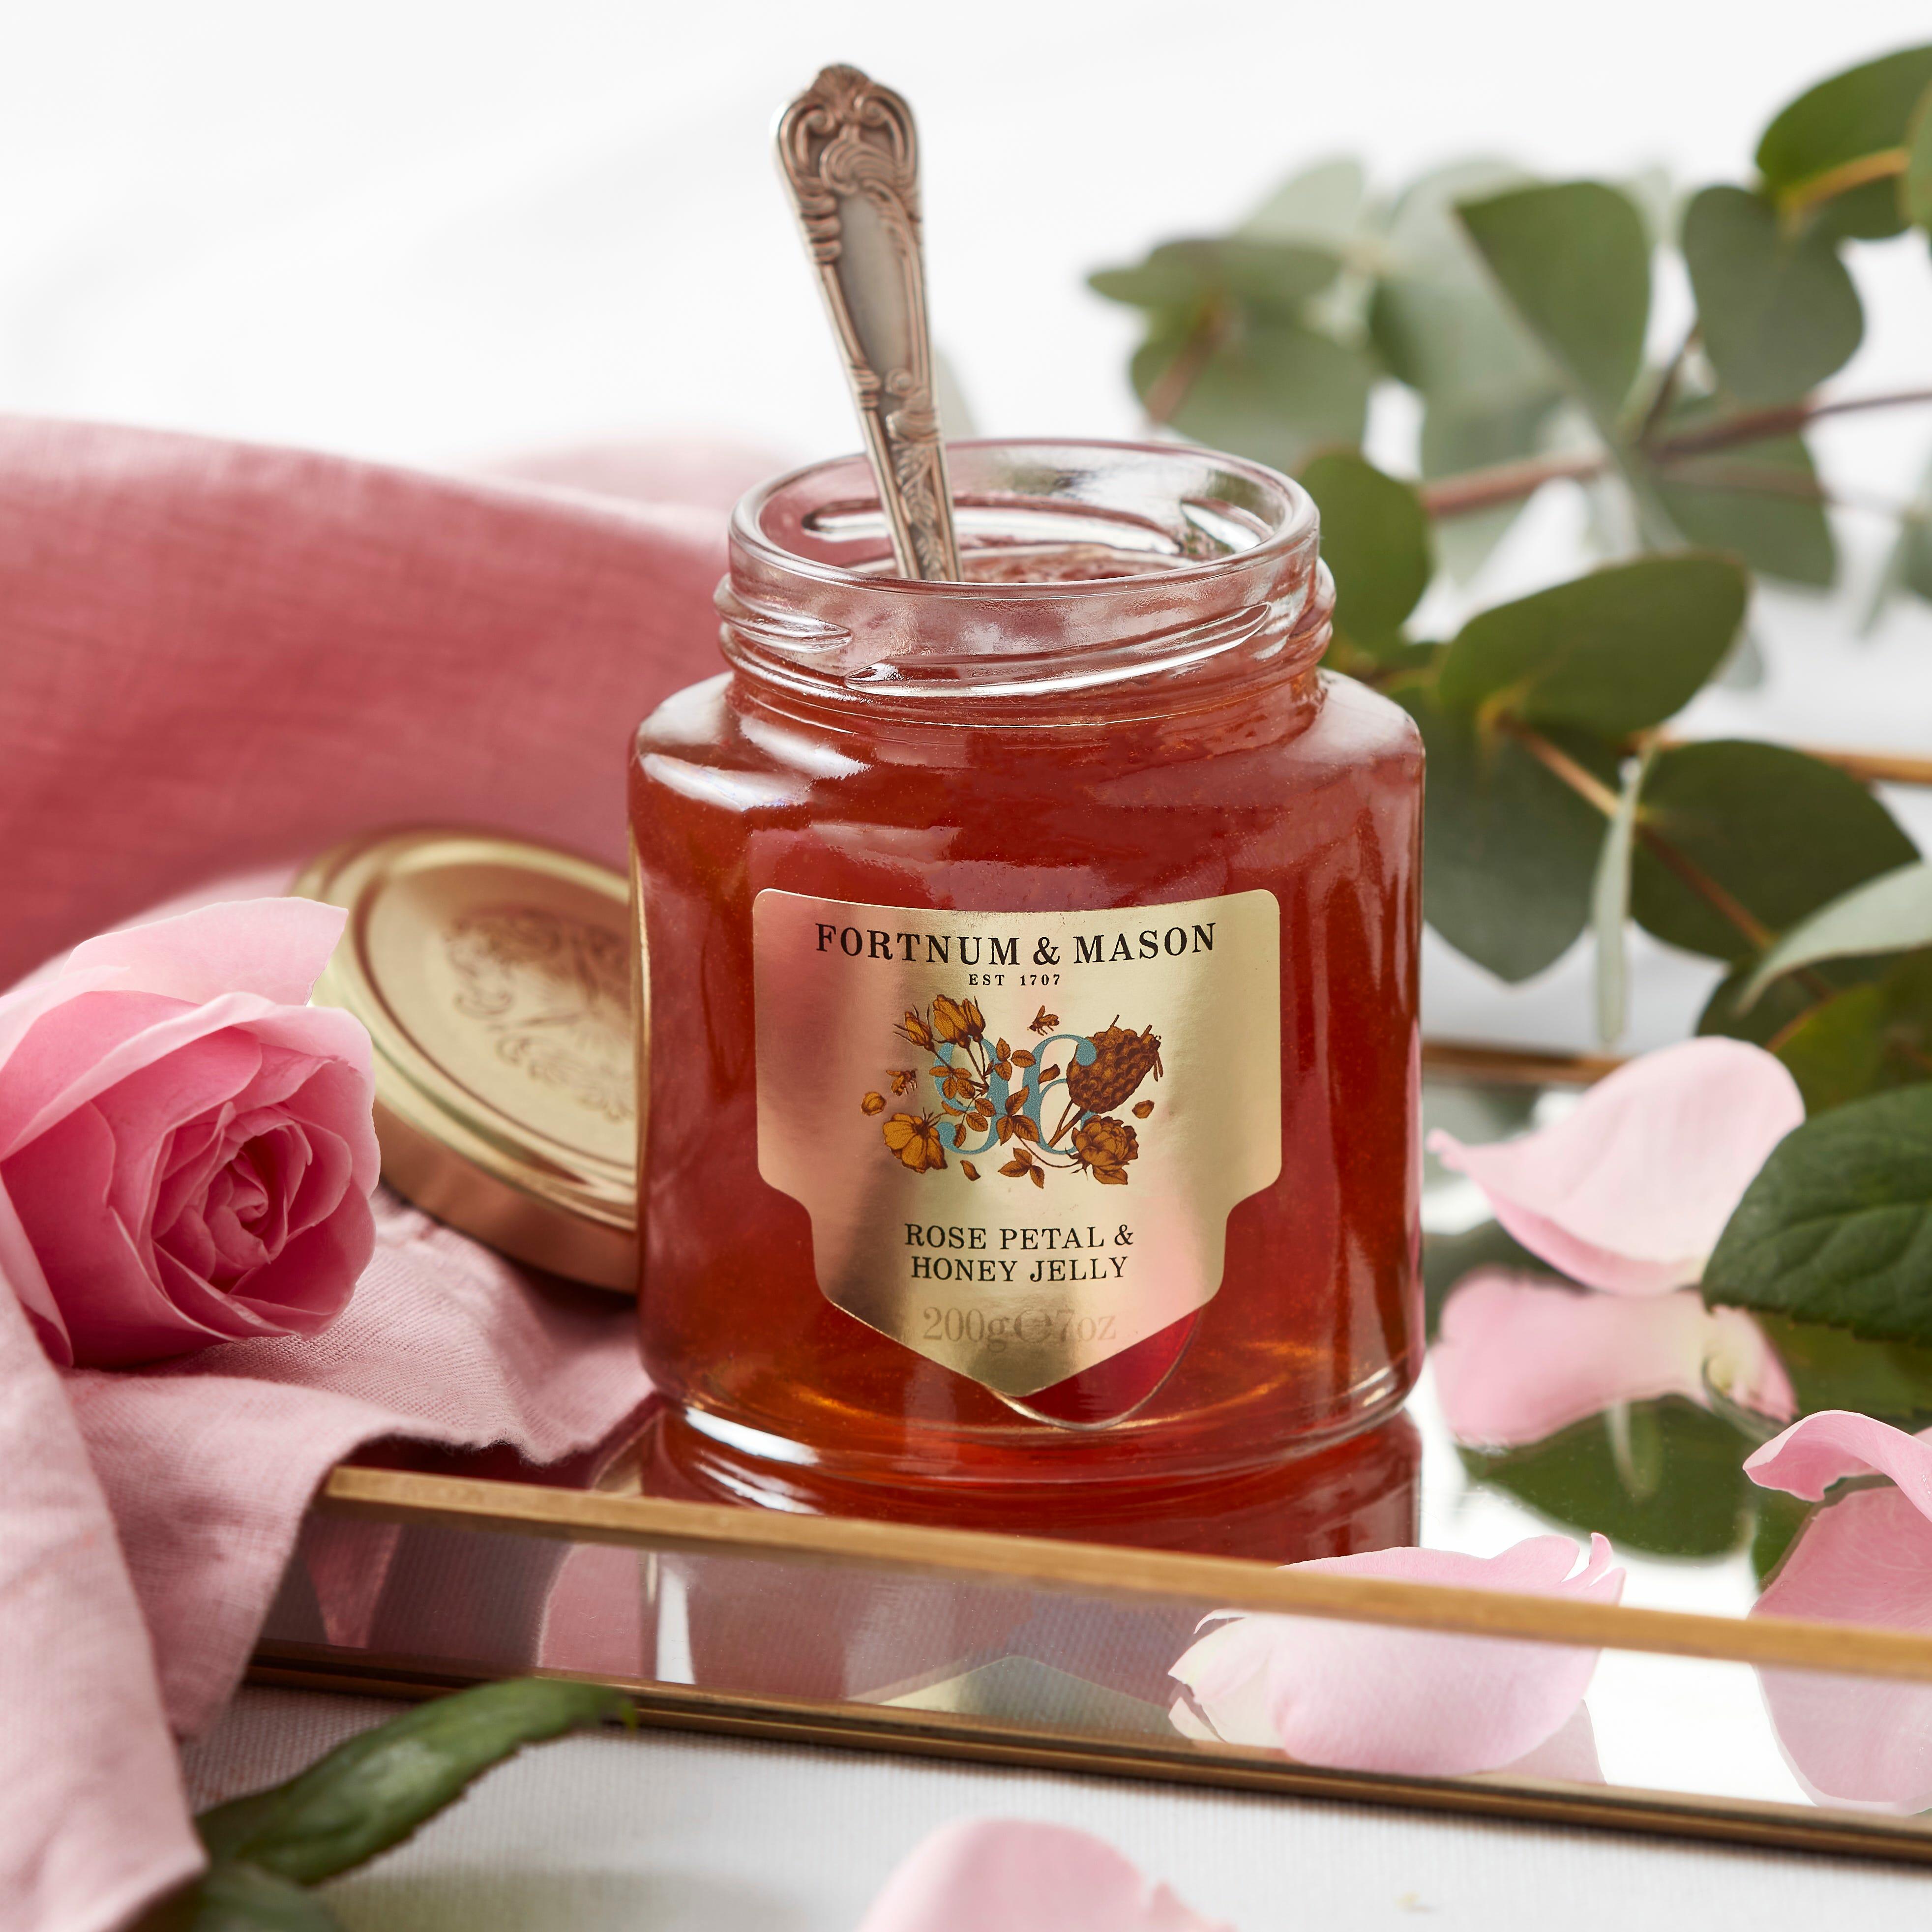 Rose Petal & English Honey Jelly, 200g, Fortnum & Mason